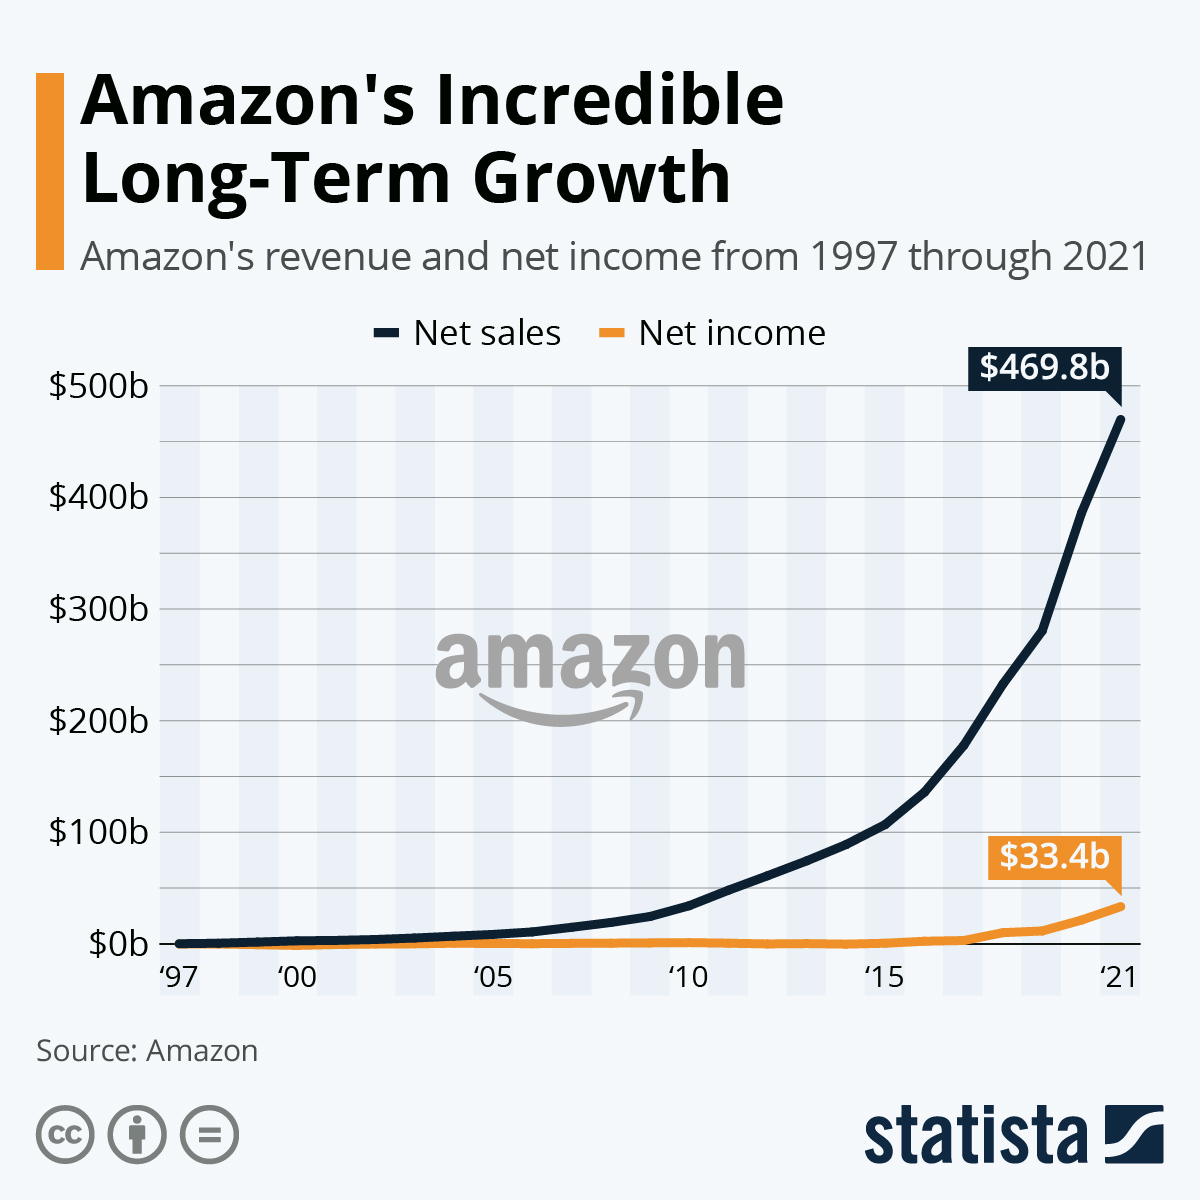 Amazon's Incredible Long-Term Growth
